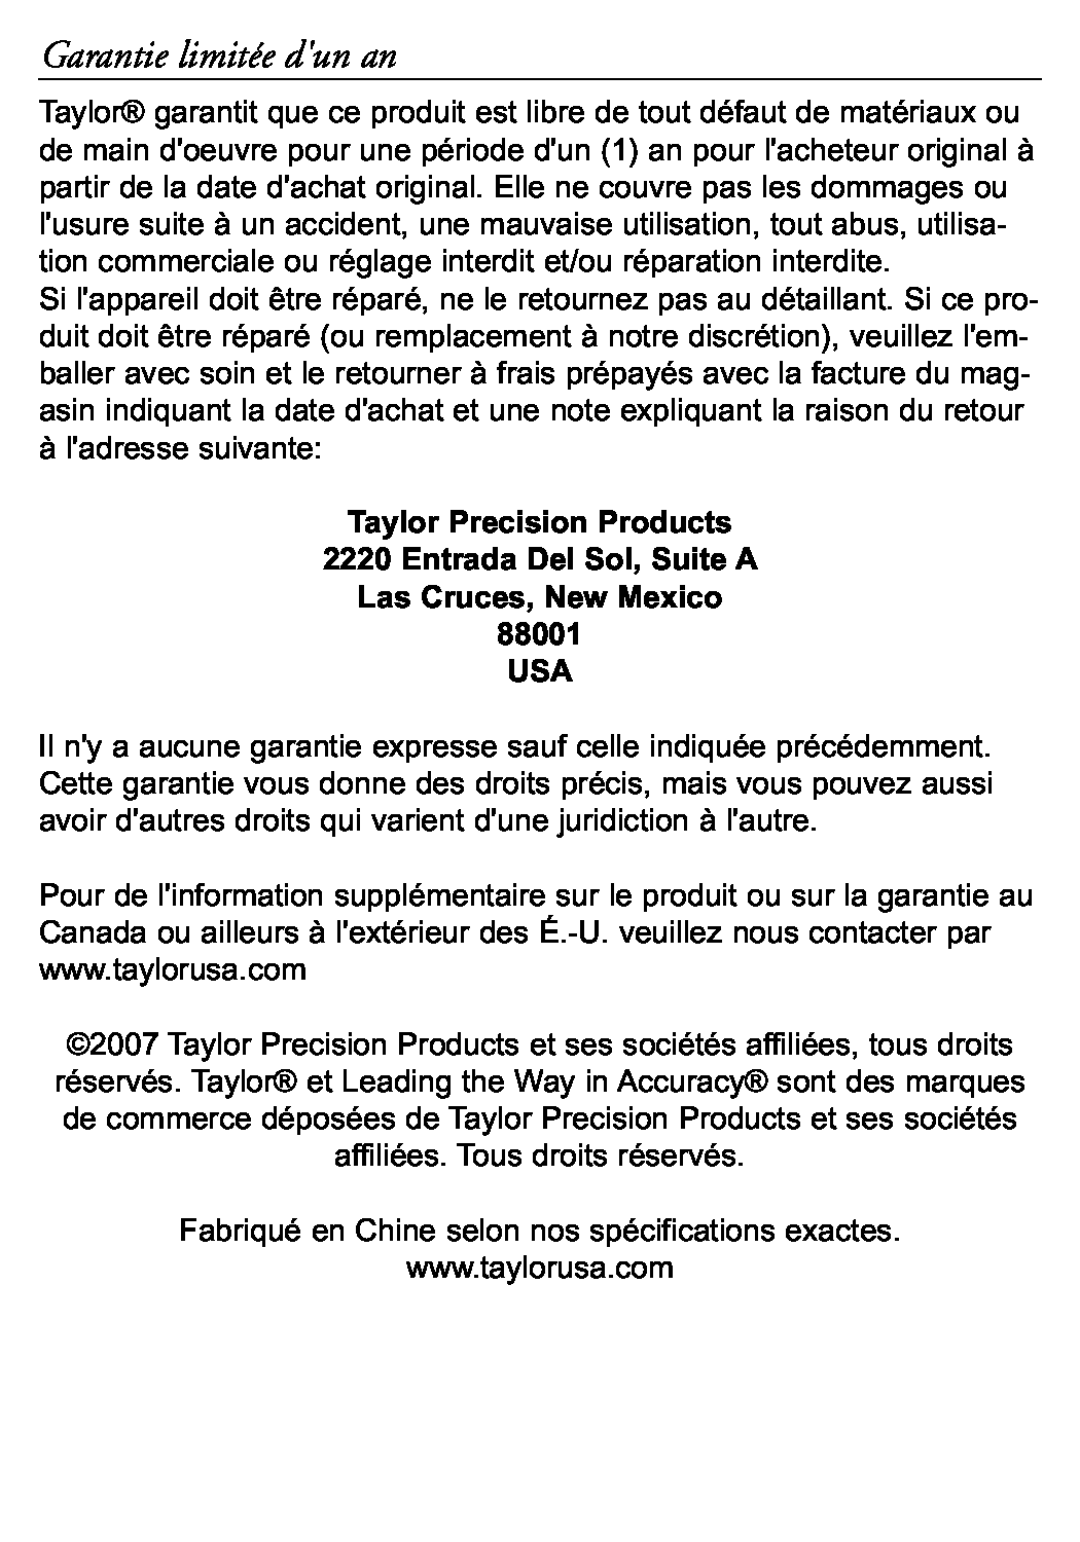 Taylor 519 Garantie limitée dun an, Taylor Precision Products, Entrada Del Sol, Suite A, Las Cruces, New Mexico 88001 USA 